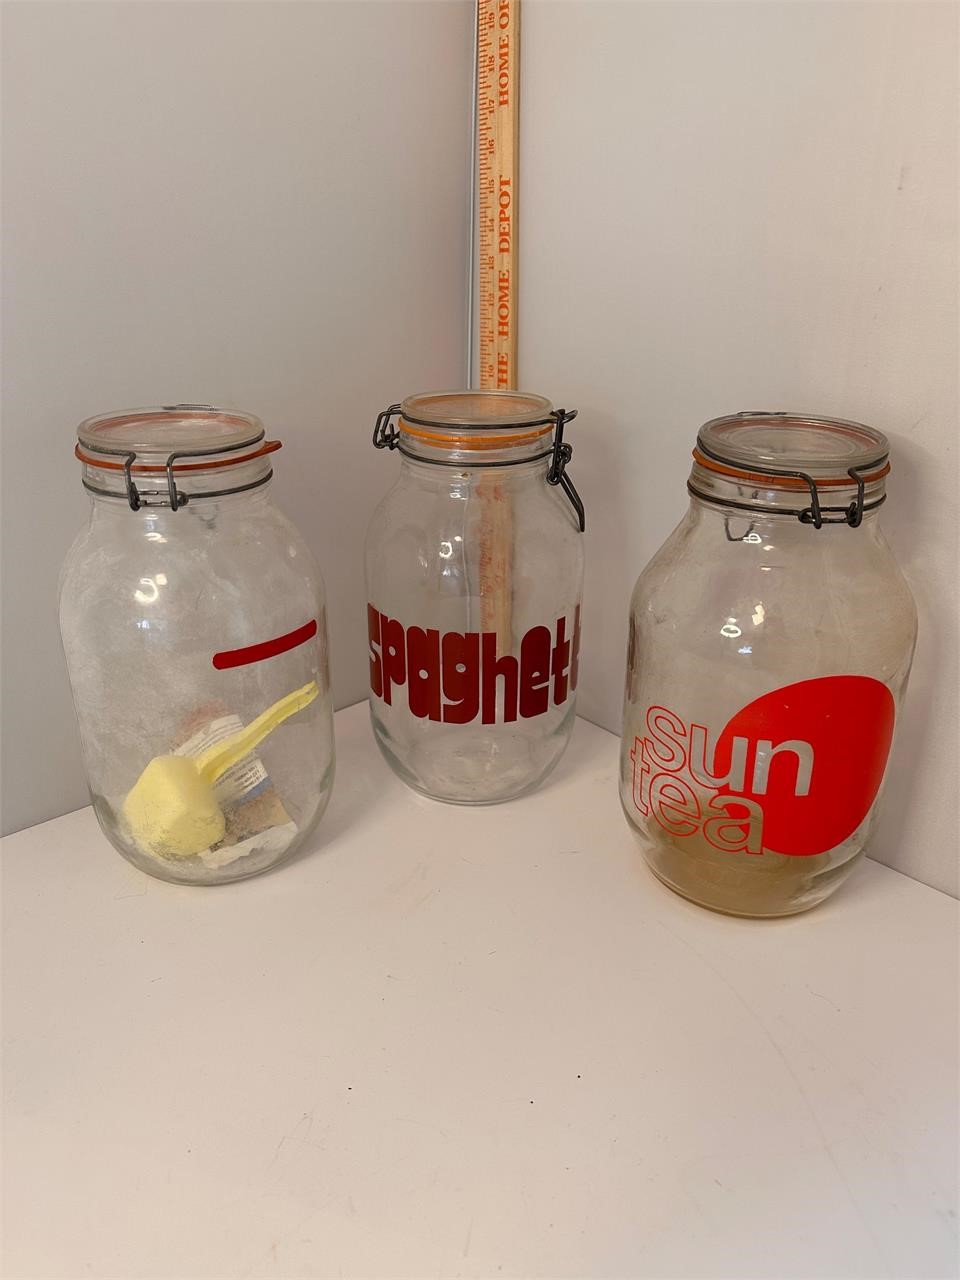 3 Sealed gallon jugs